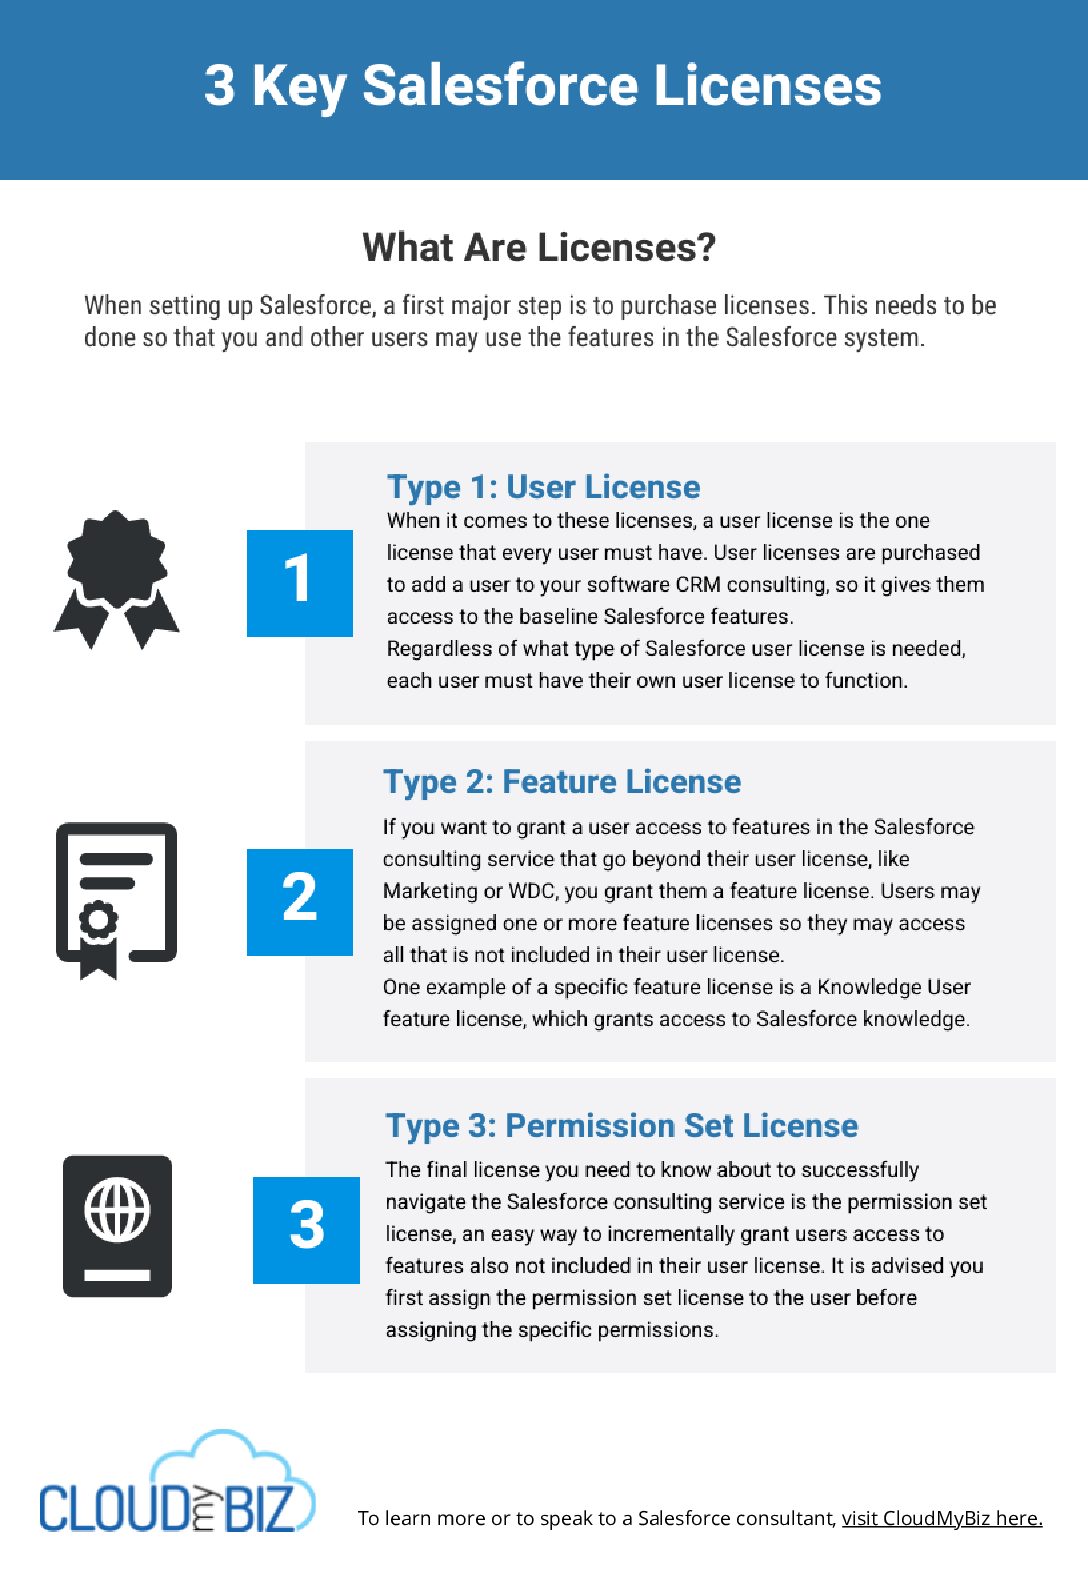 3 Key Salesforce Licenses